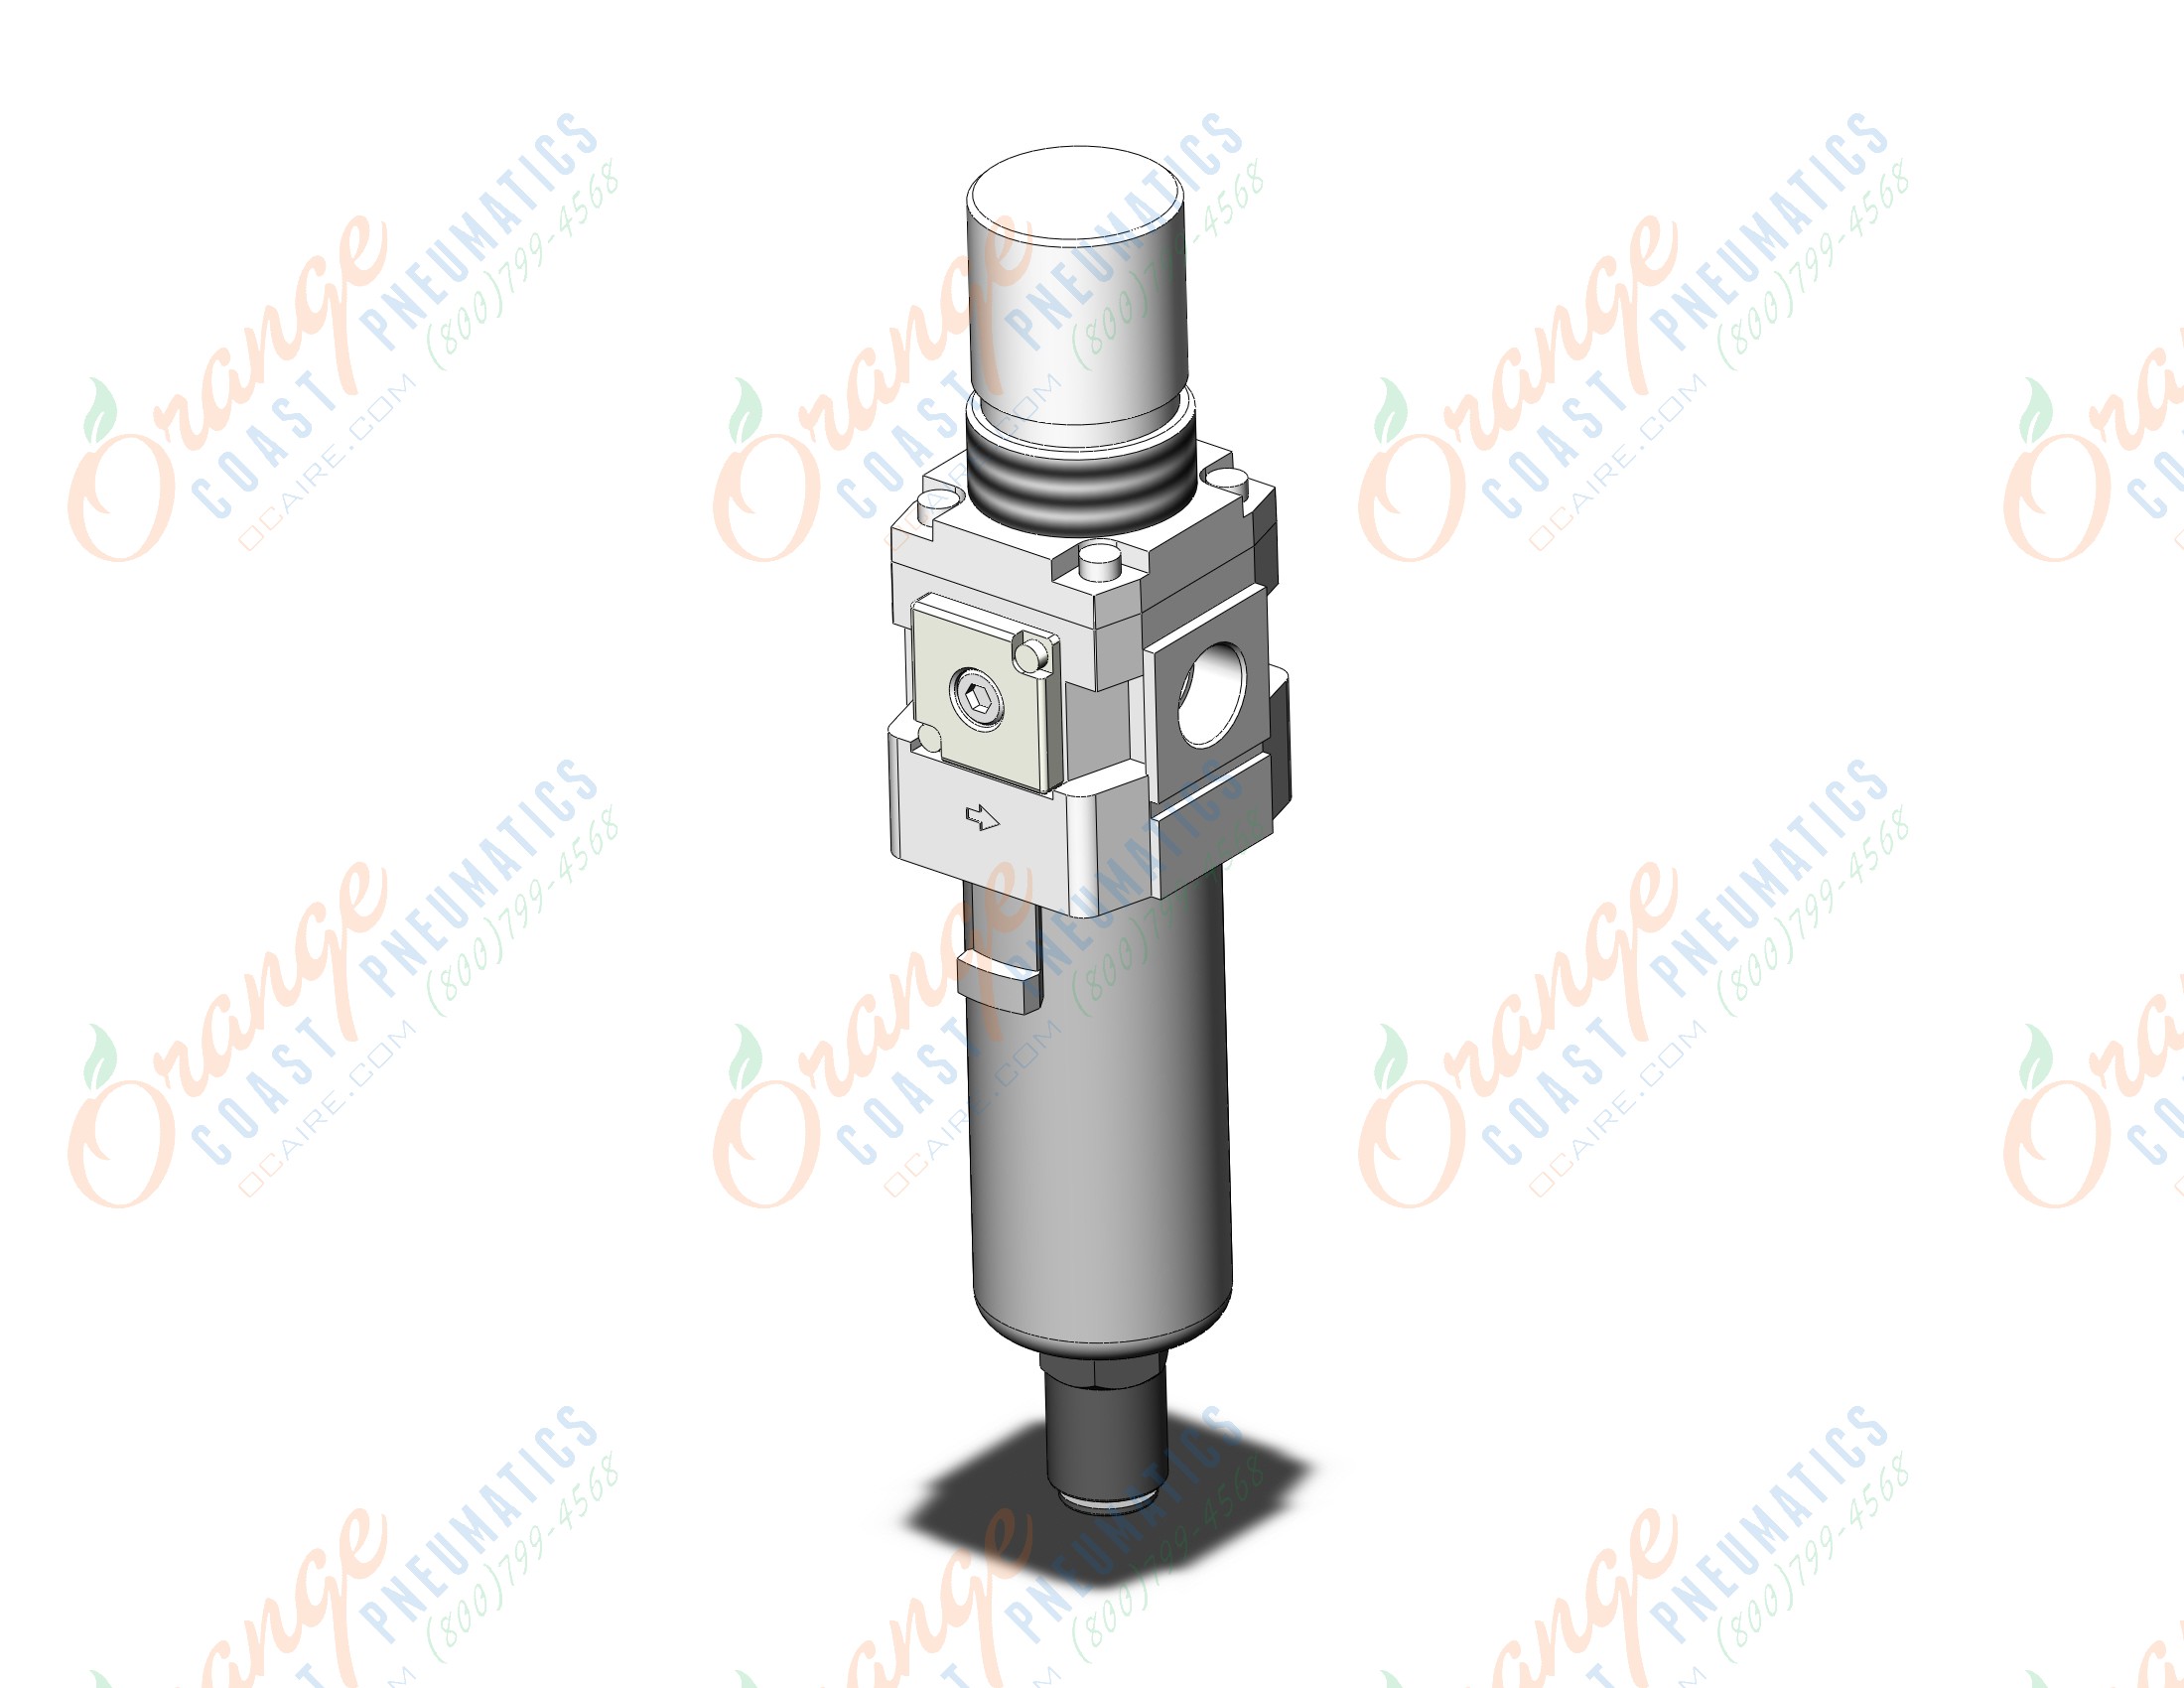 SMC AW30-N03DH-1Z-B filter/regulator, FILTER/REGULATOR, MODULAR F.R.L.